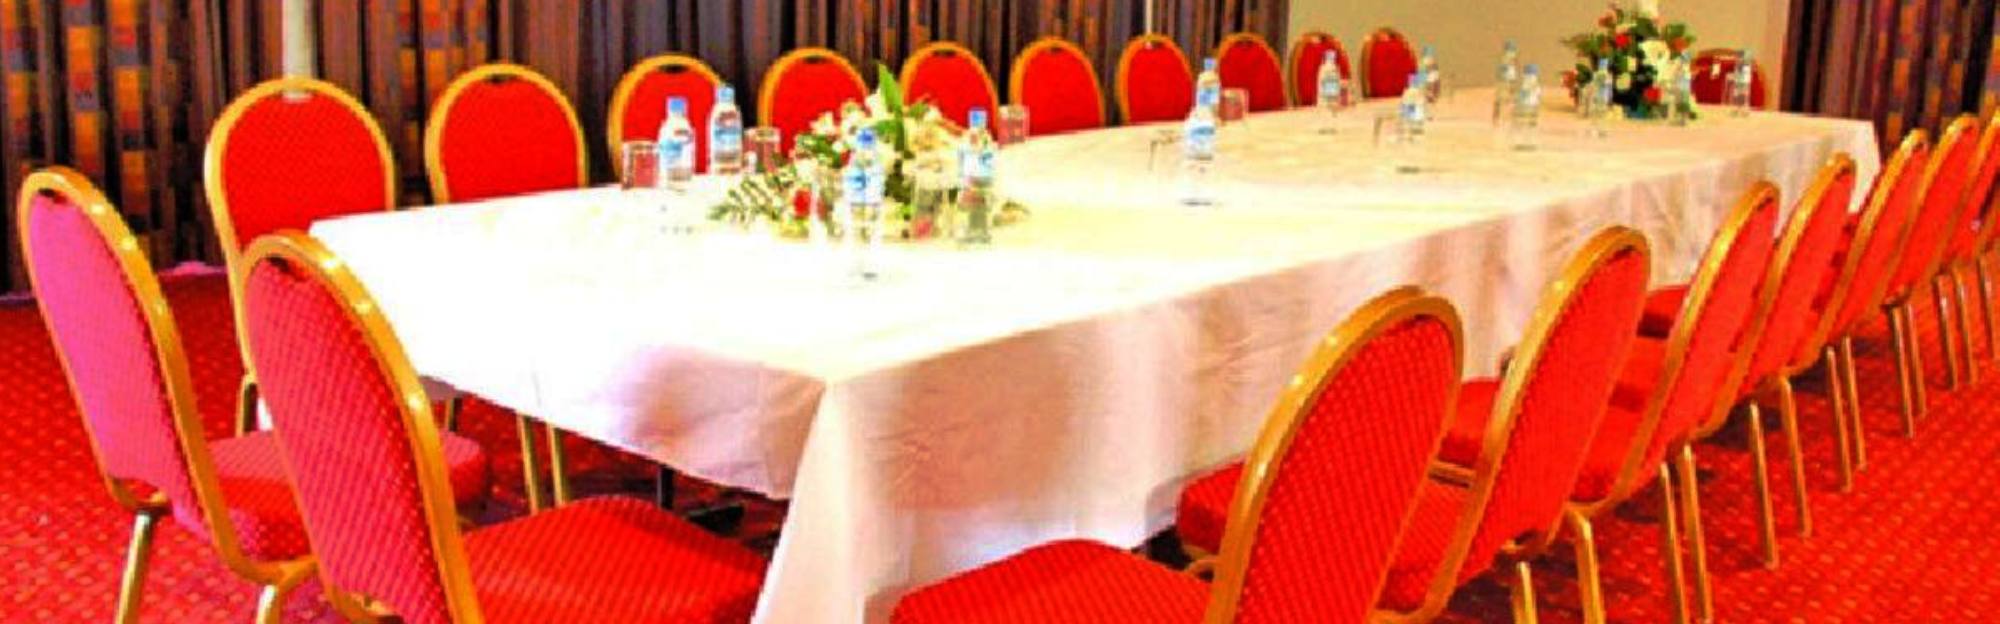 Tropic Inn Hotel Conferences & Weddings